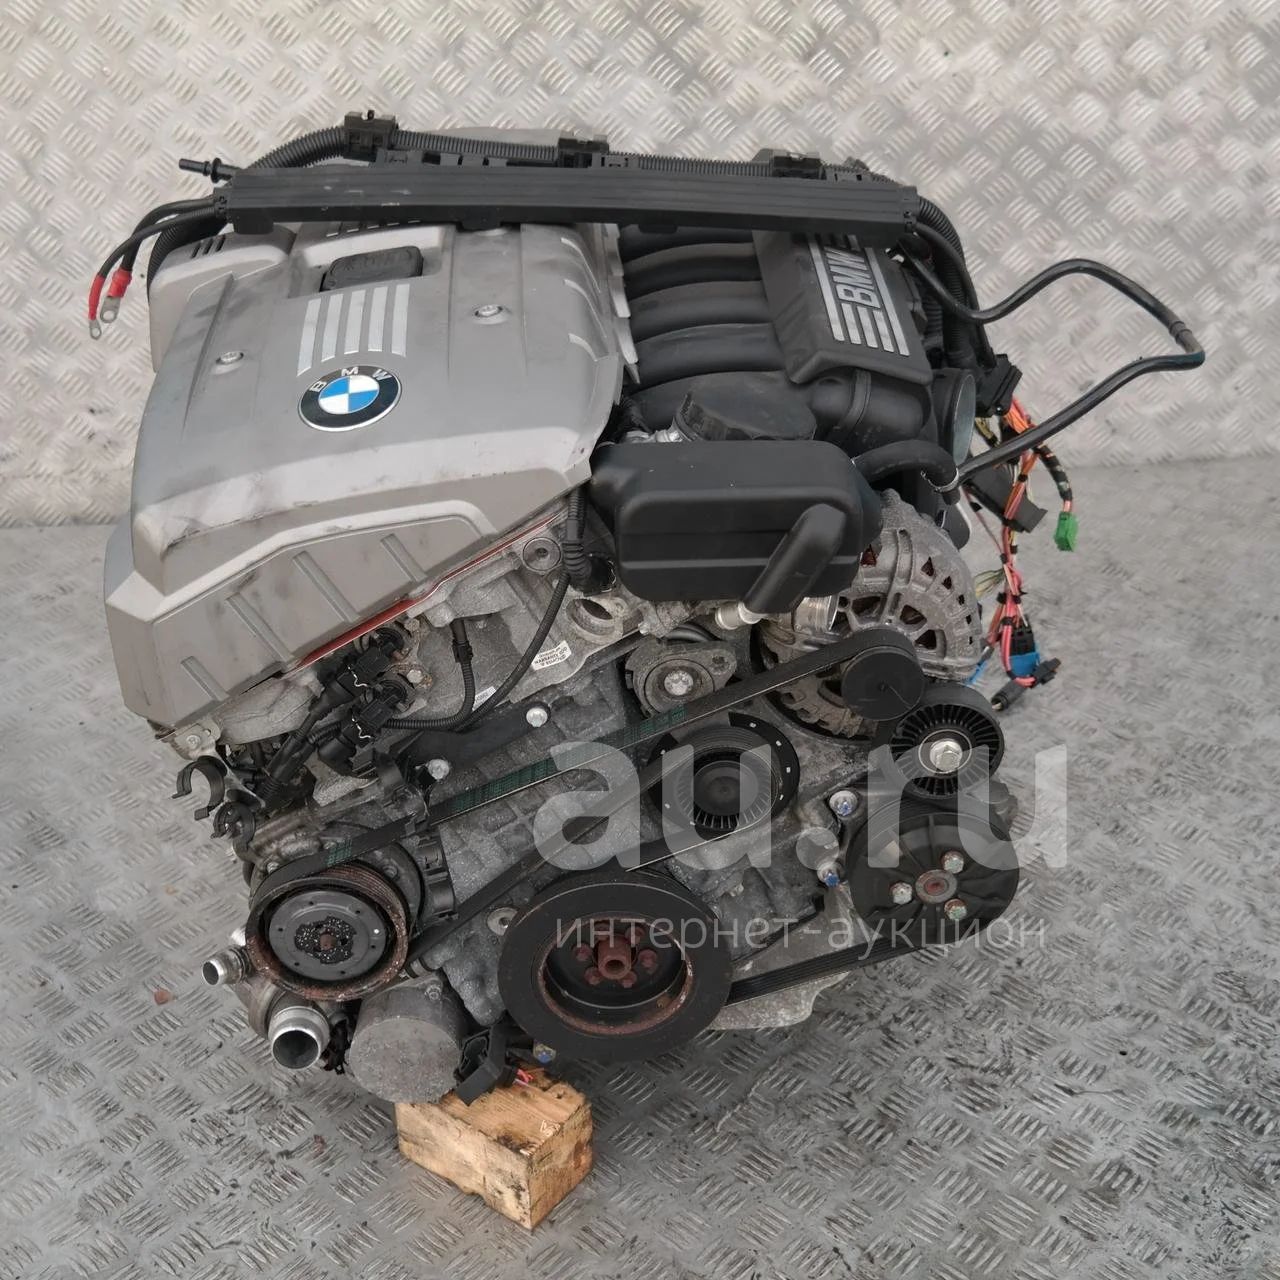 Е60 n52b25. BMW e60 n52 мотор. Двигатель БМВ е60 n52. N52 двигатель BMW. N52b25.